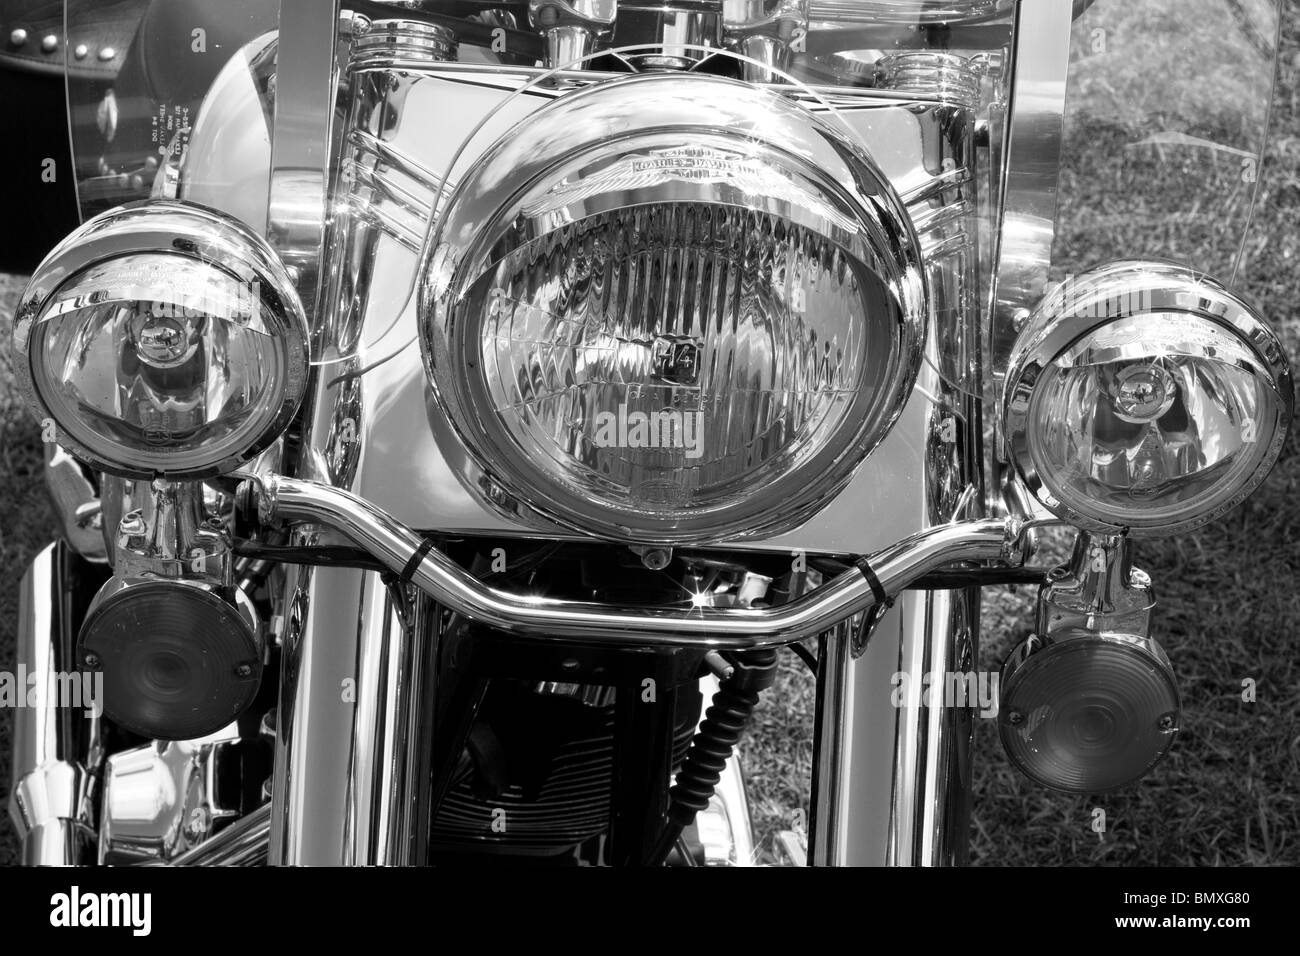 Harley Davidson Bike Abstract View Head Lights Stock Photo